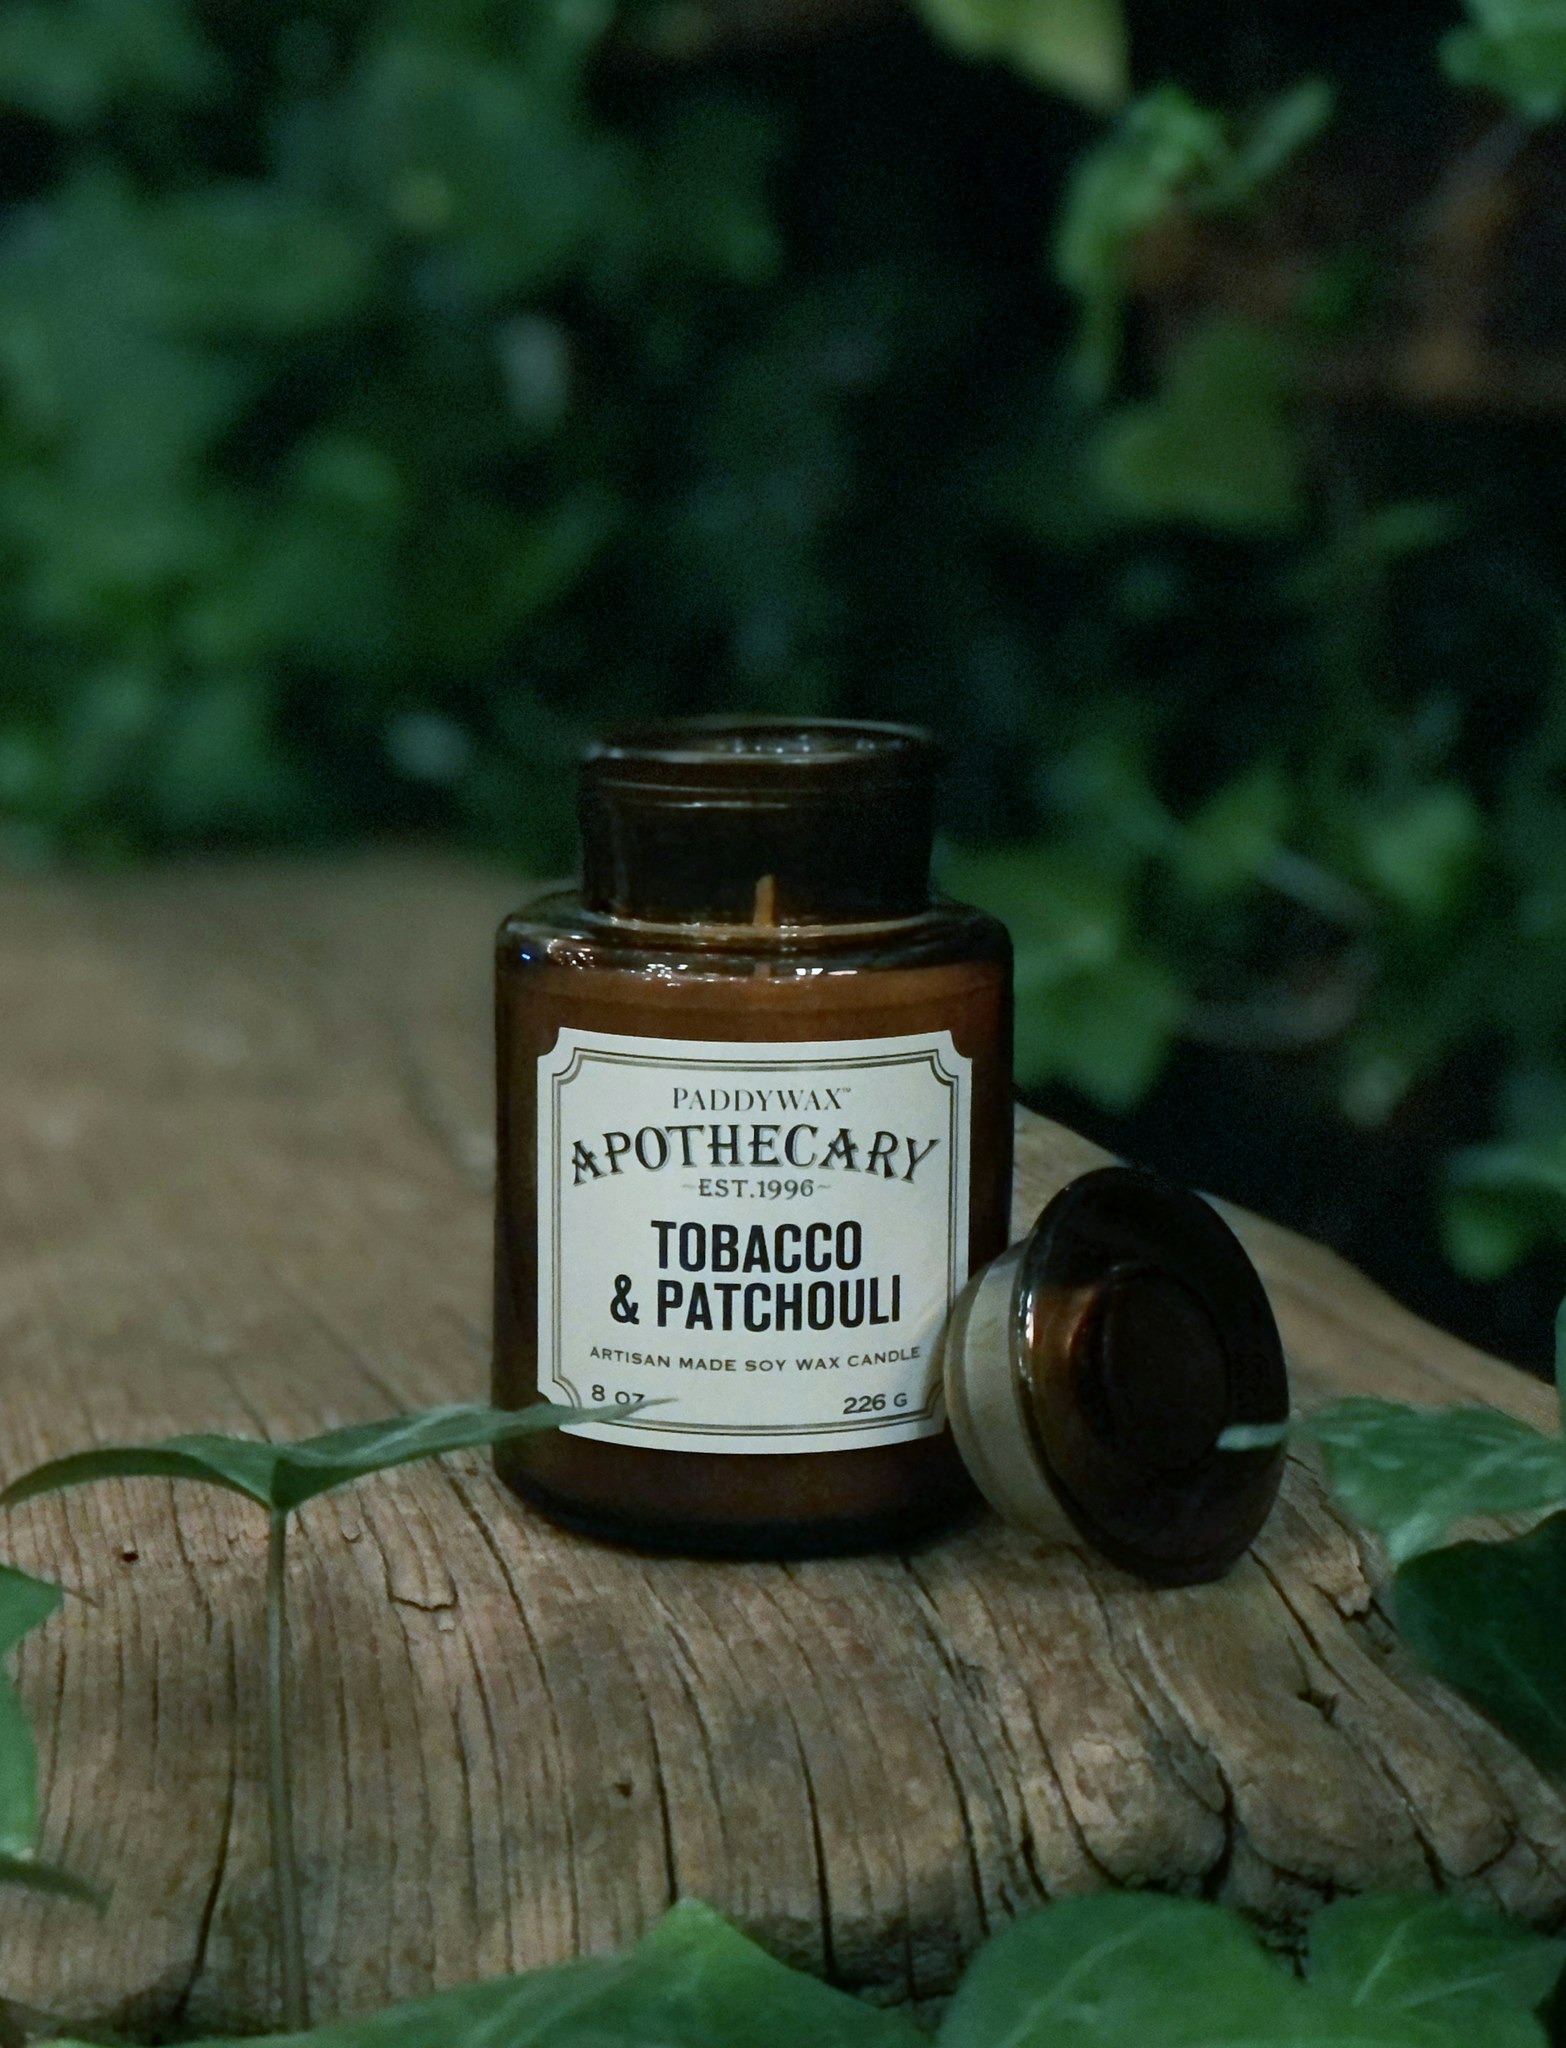 Tobacco & Patchouli